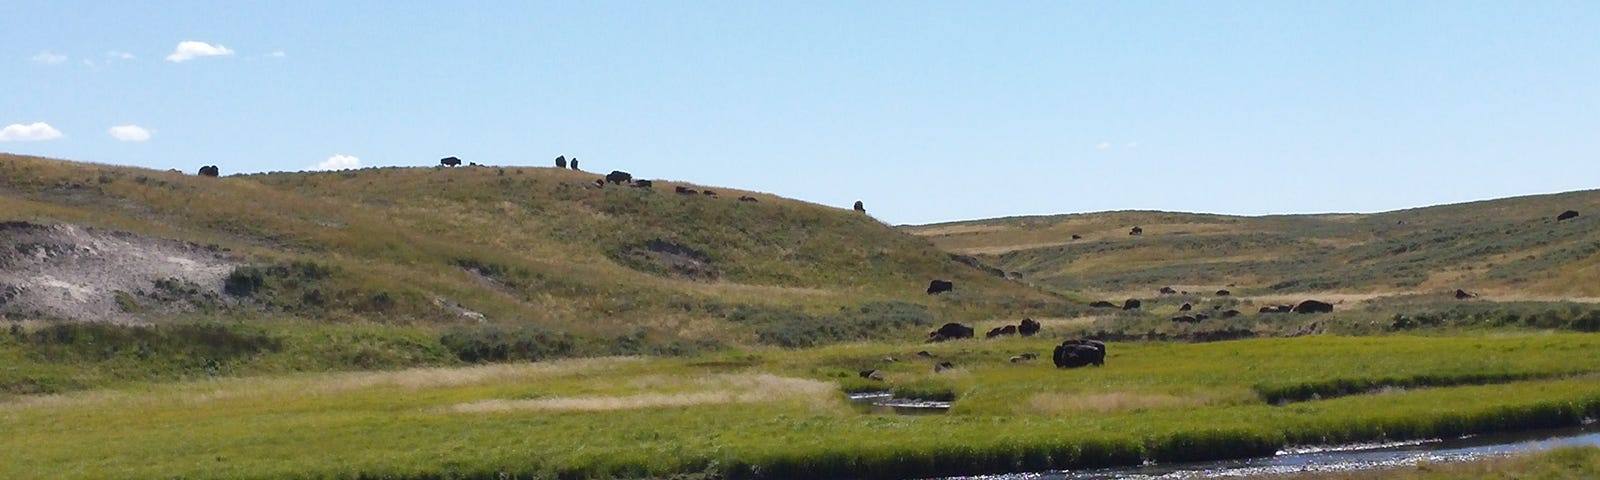 A herd of buffalo grazing on the plain